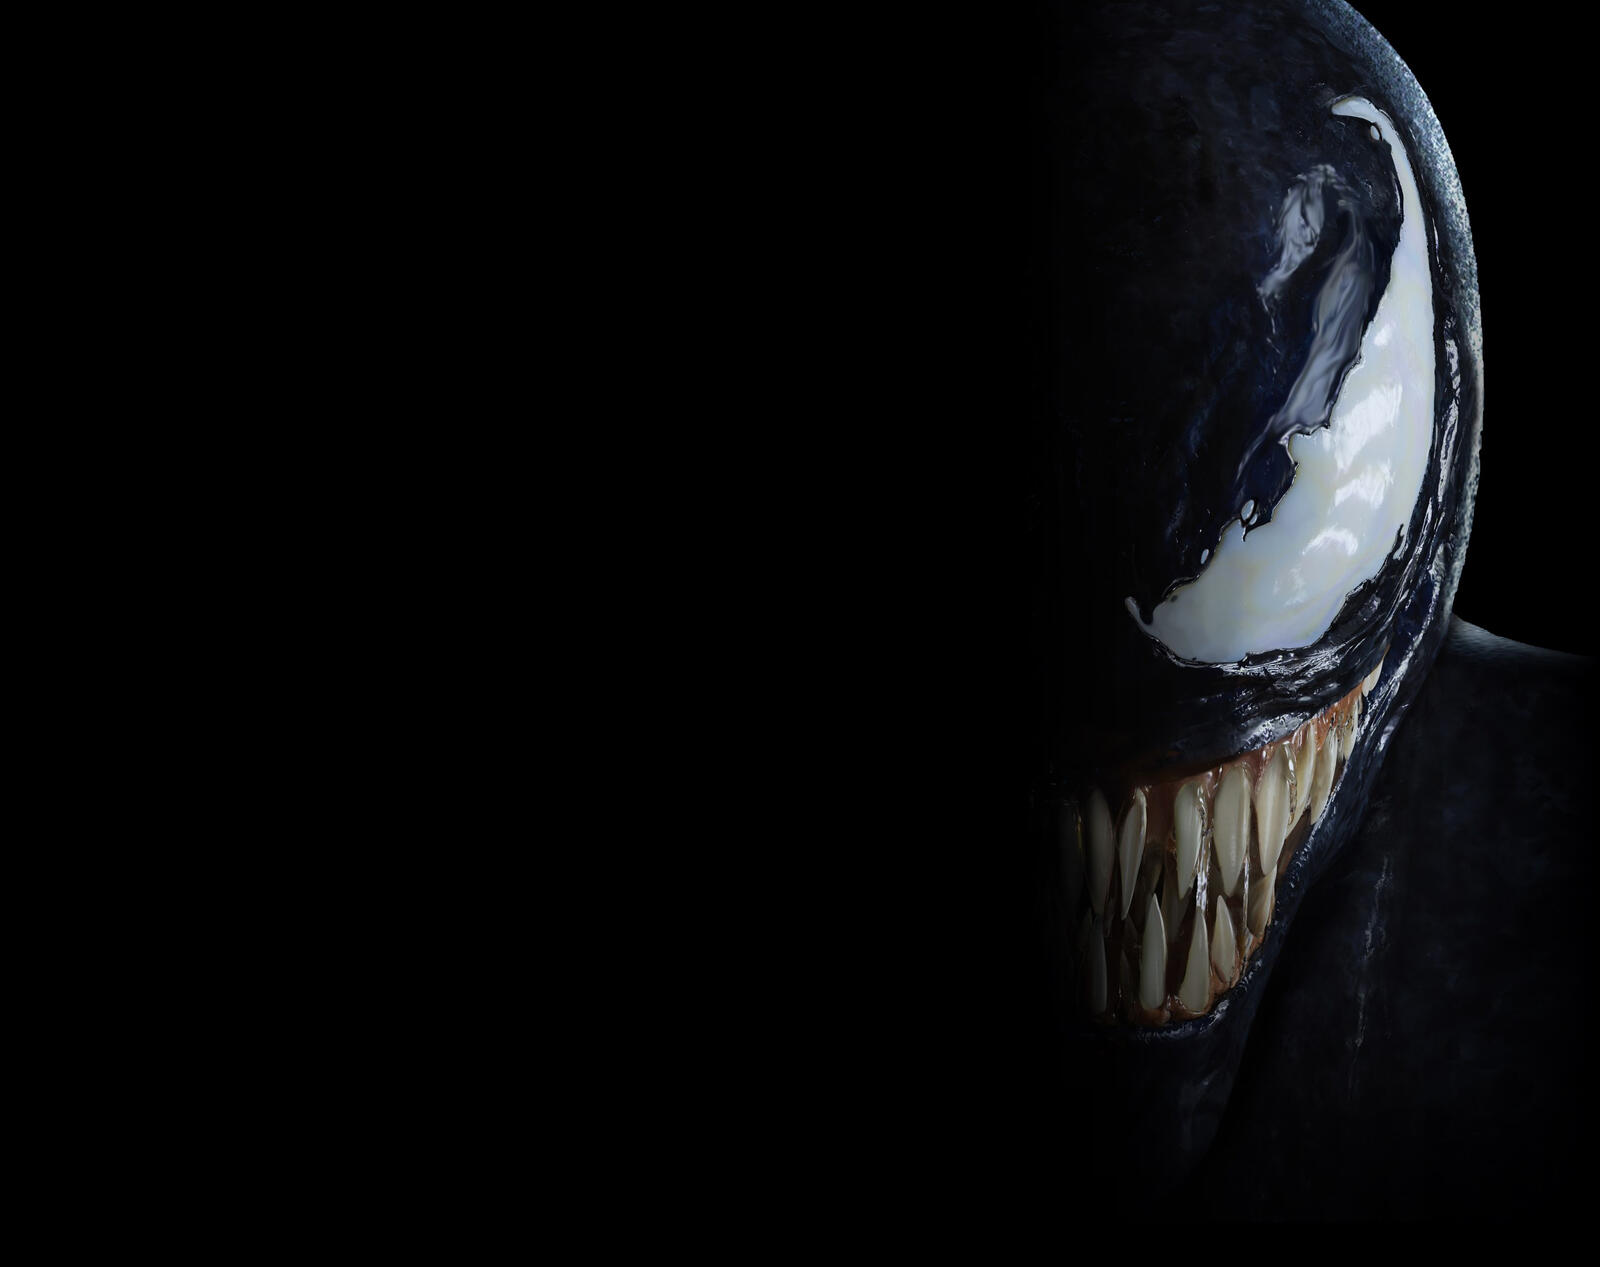 Wallpapers 2018 movies Venom Movie Venom on the desktop